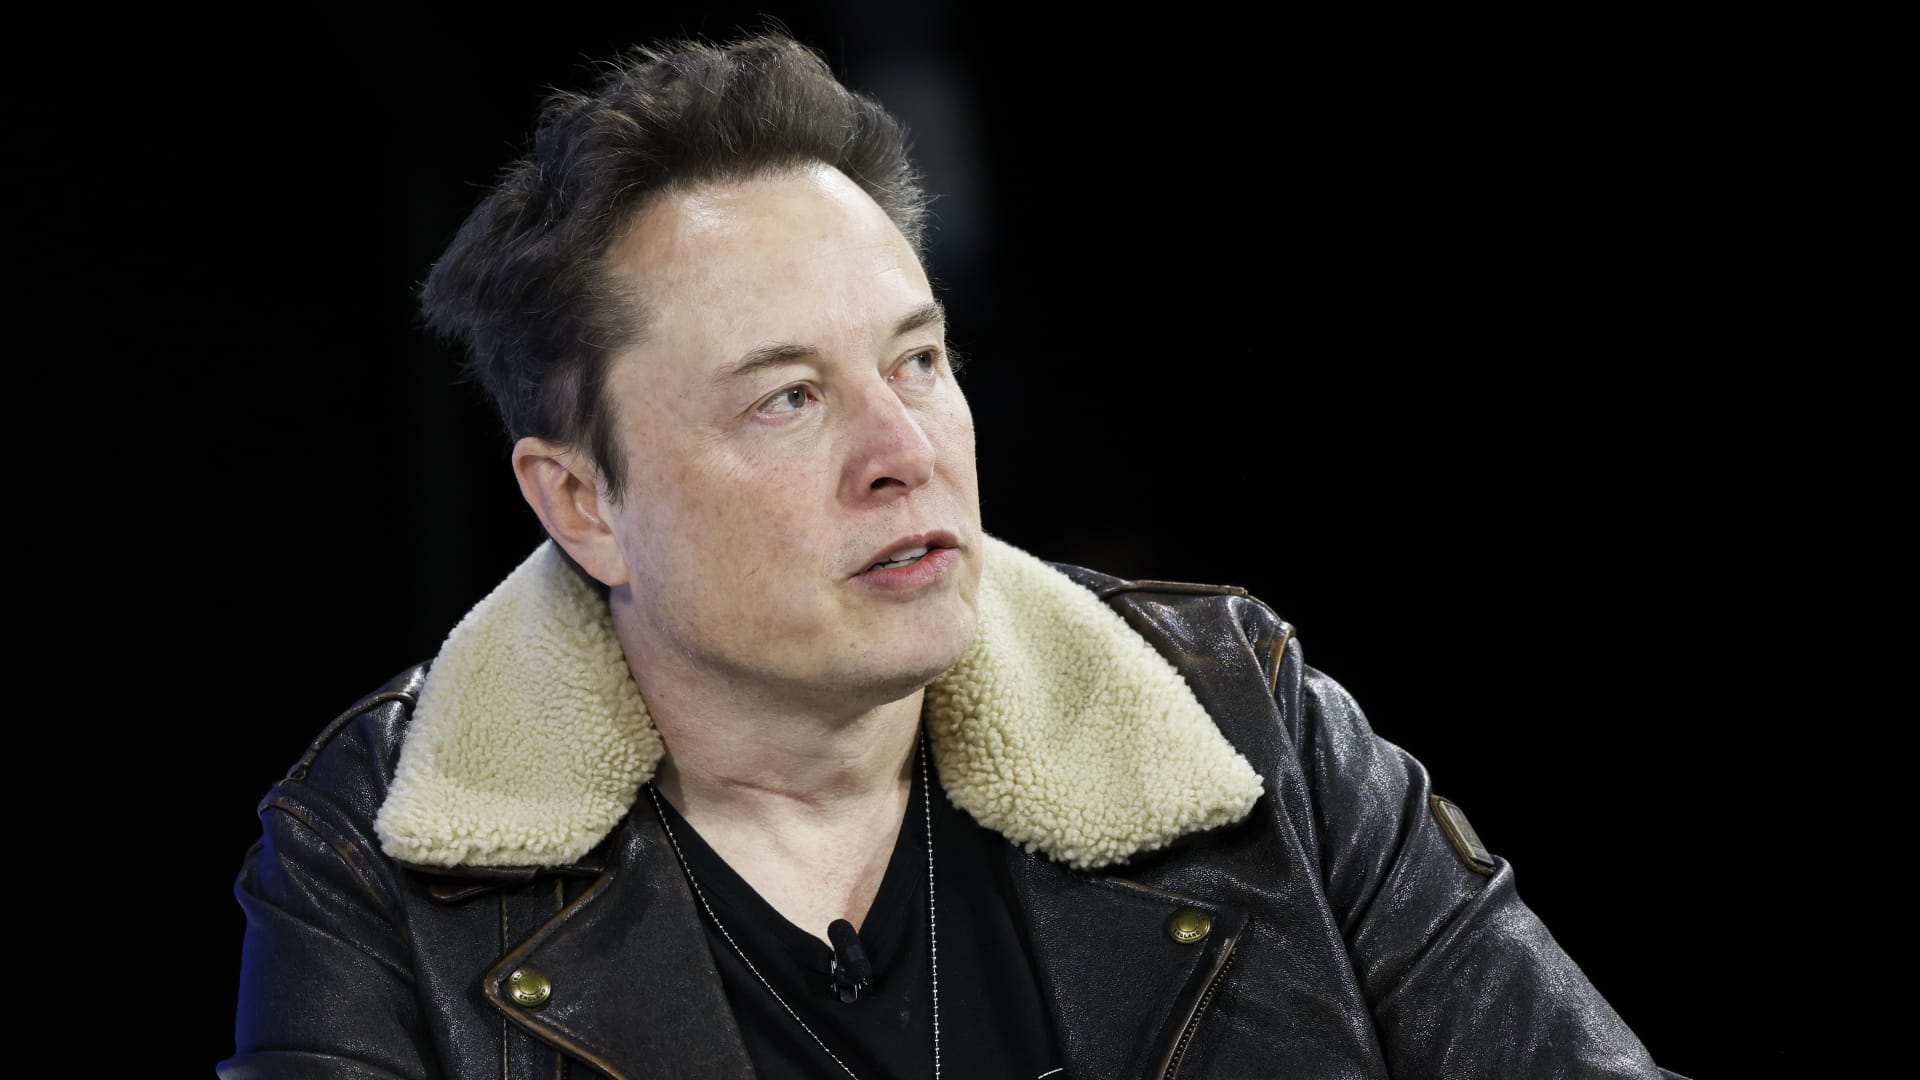 Elon Musk’s $56 billion Tesla compensation voided by judge, shares slide Auto Recent